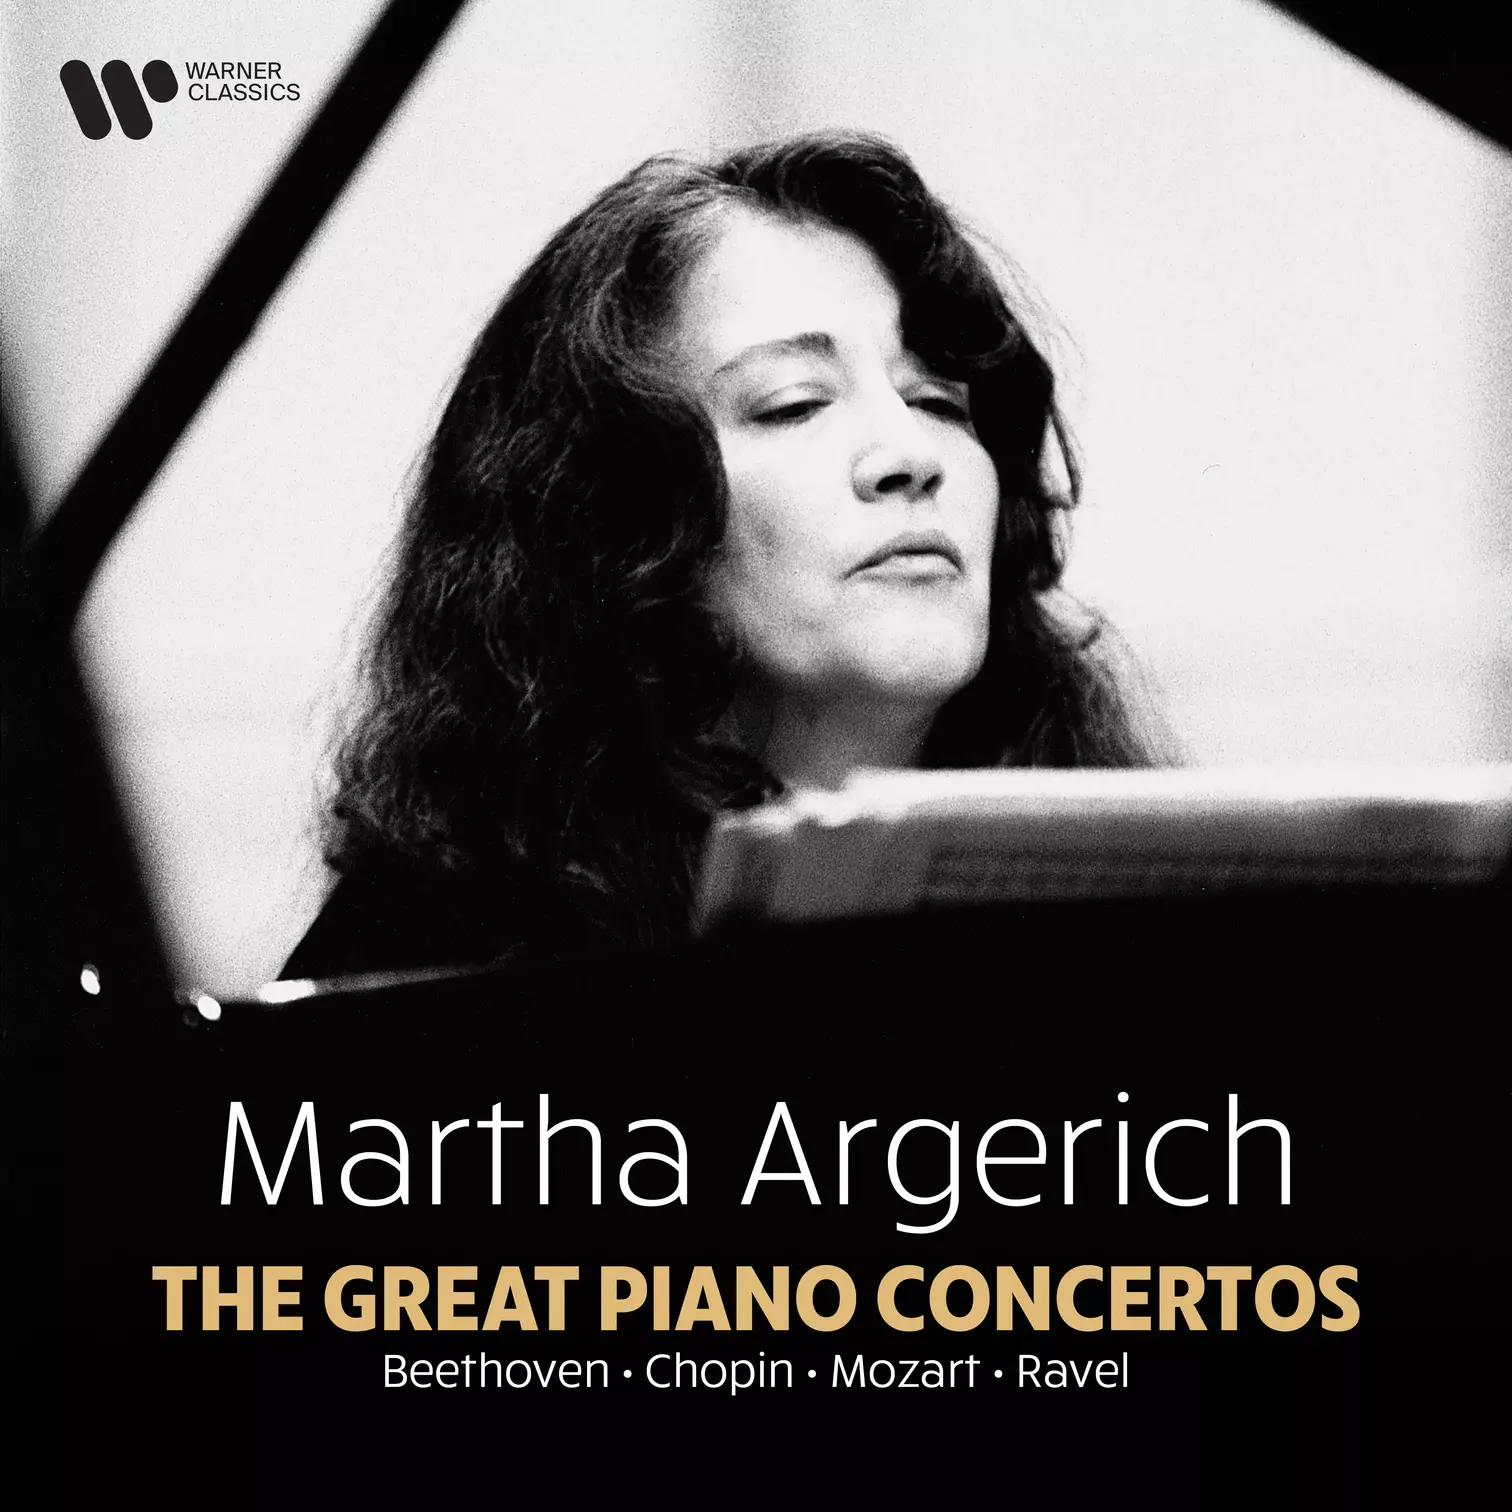 The Great Piano Concertos: Beethoven, Chopin, Mozart, Ravel